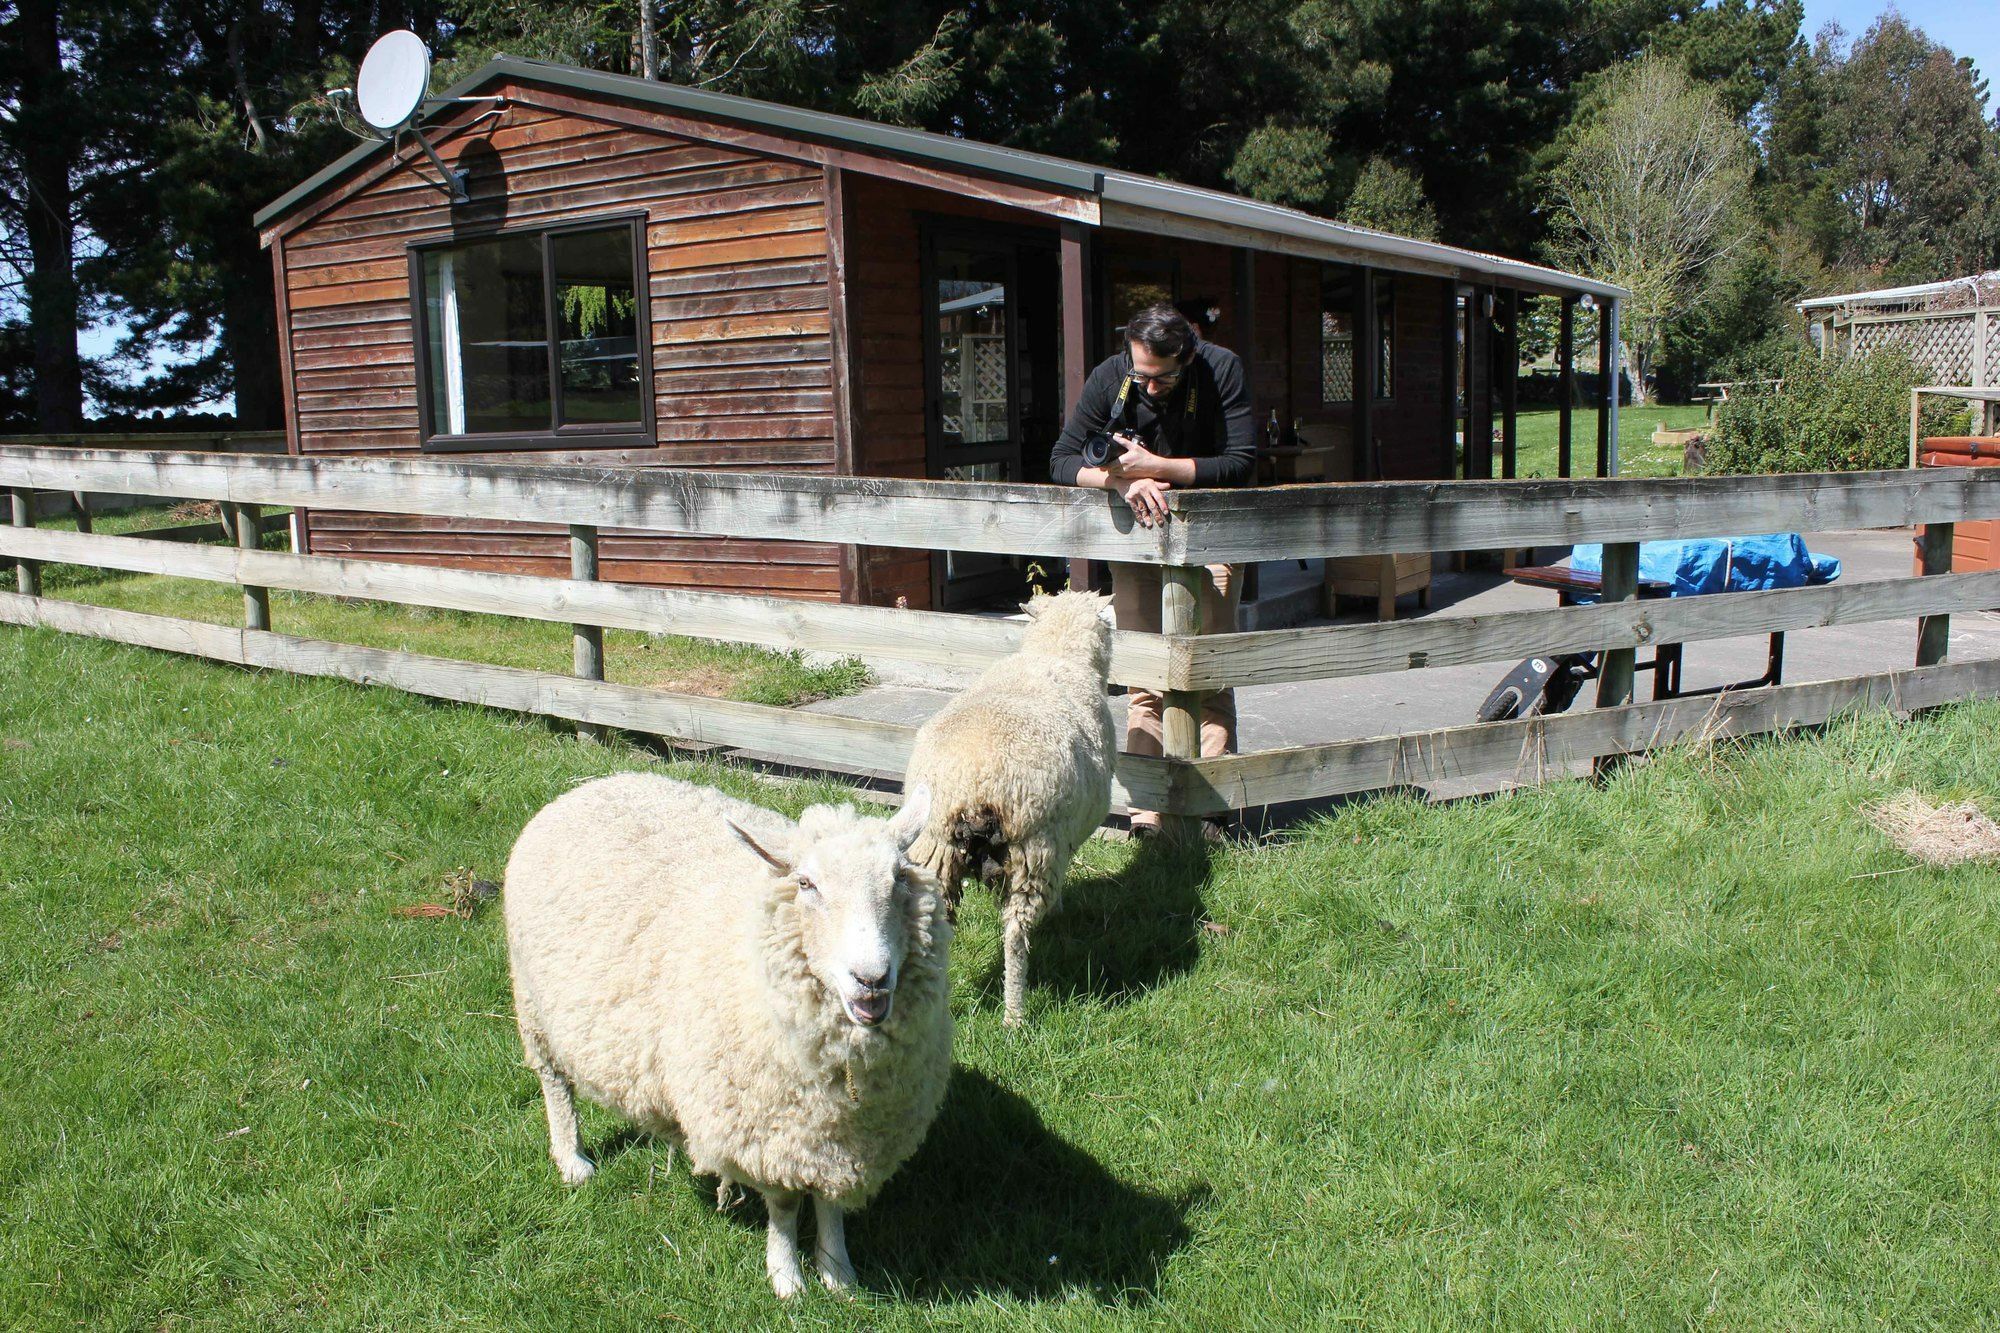 Height Of Dunedin Serviced Farm Stay Extérieur photo